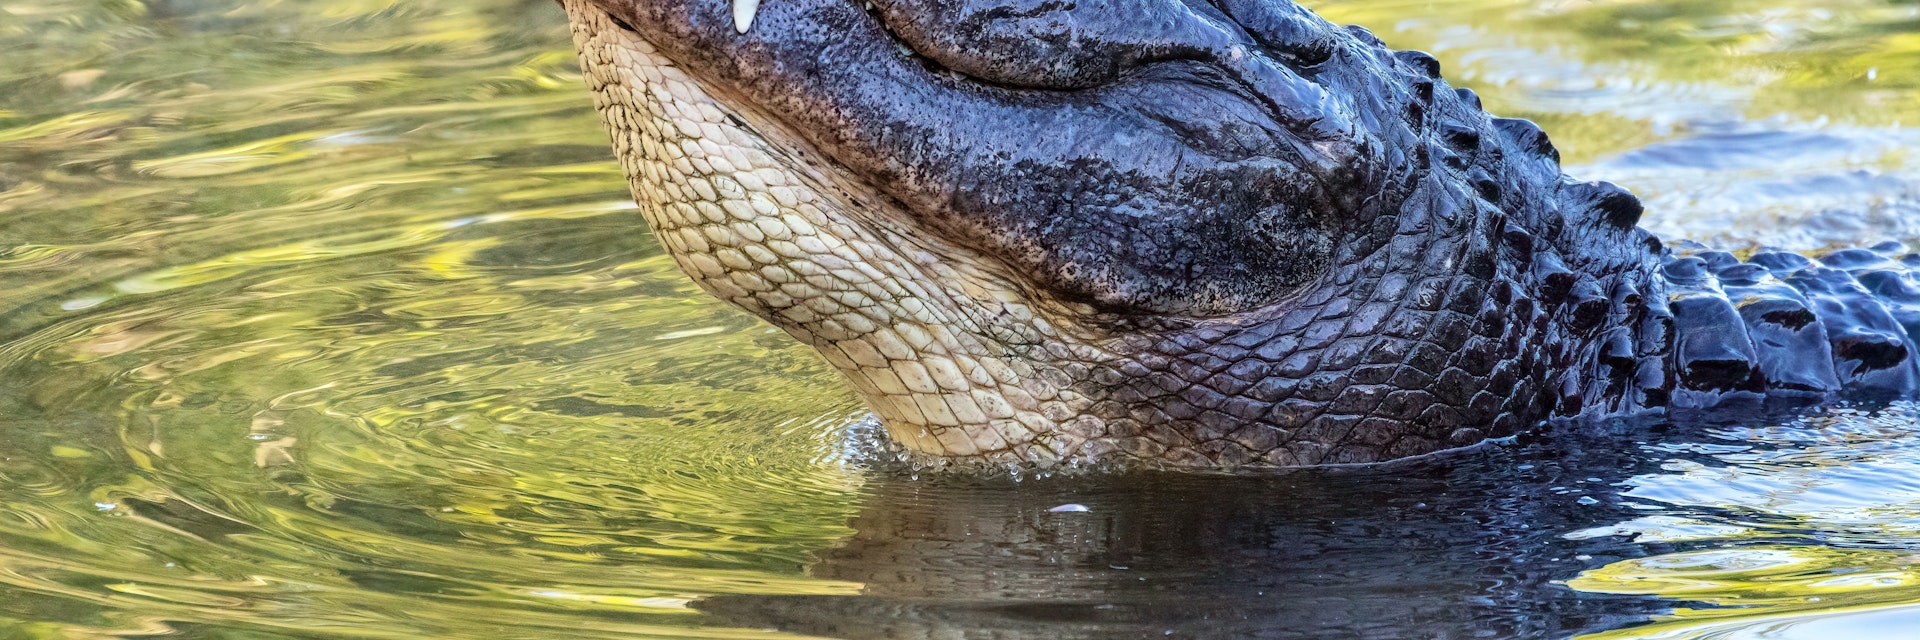 Alligator (Alligator mississippiensis) at the Alligator Farm in St. Augustine, Florida.; Shutterstock ID 1411761494; your: Bridget Brown; gl: 65050; netsuite: Online Editorial; full: POI Image Update